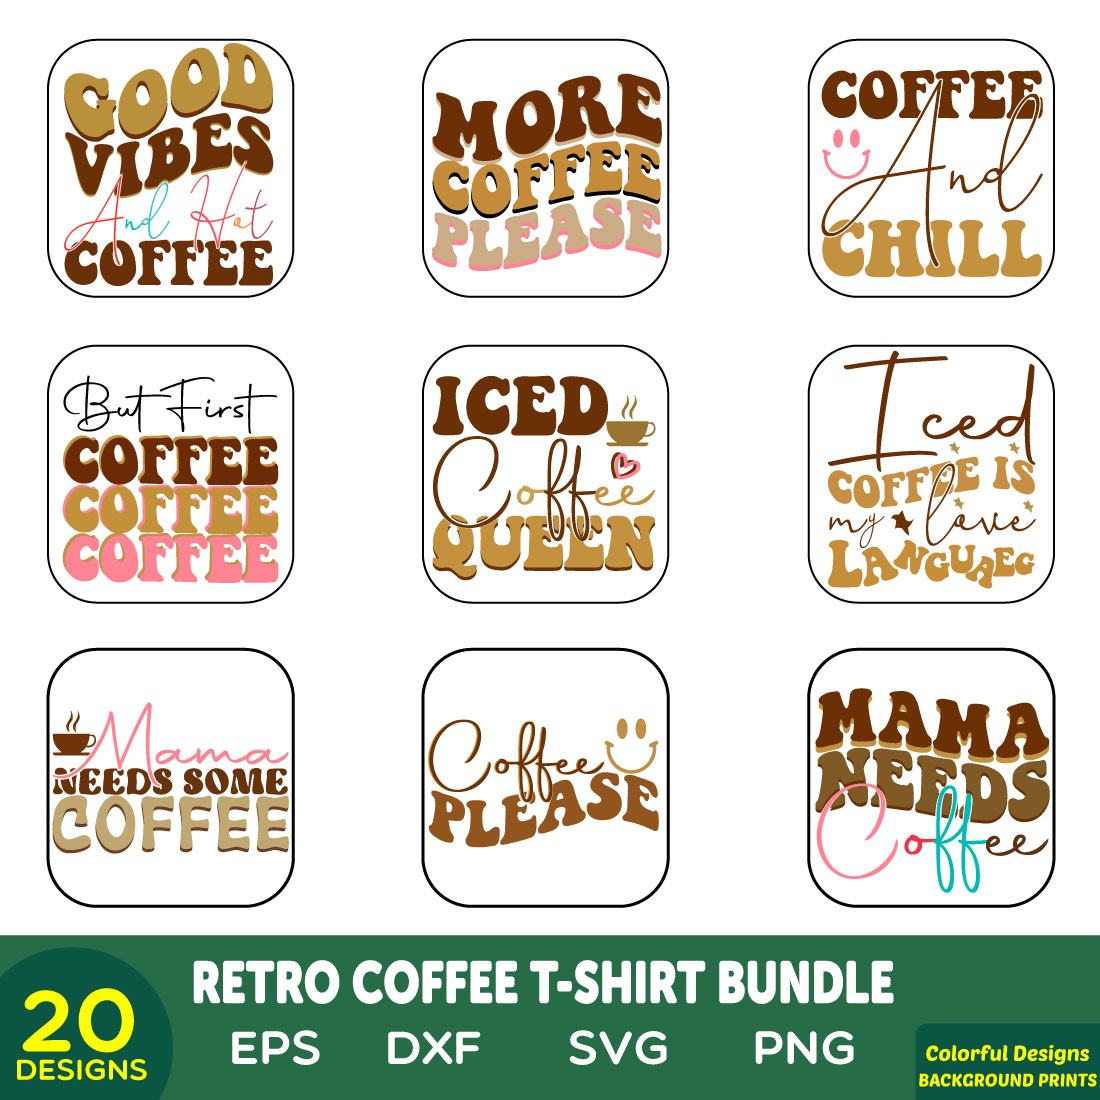 retro coffee t- shirt bundle cover image.